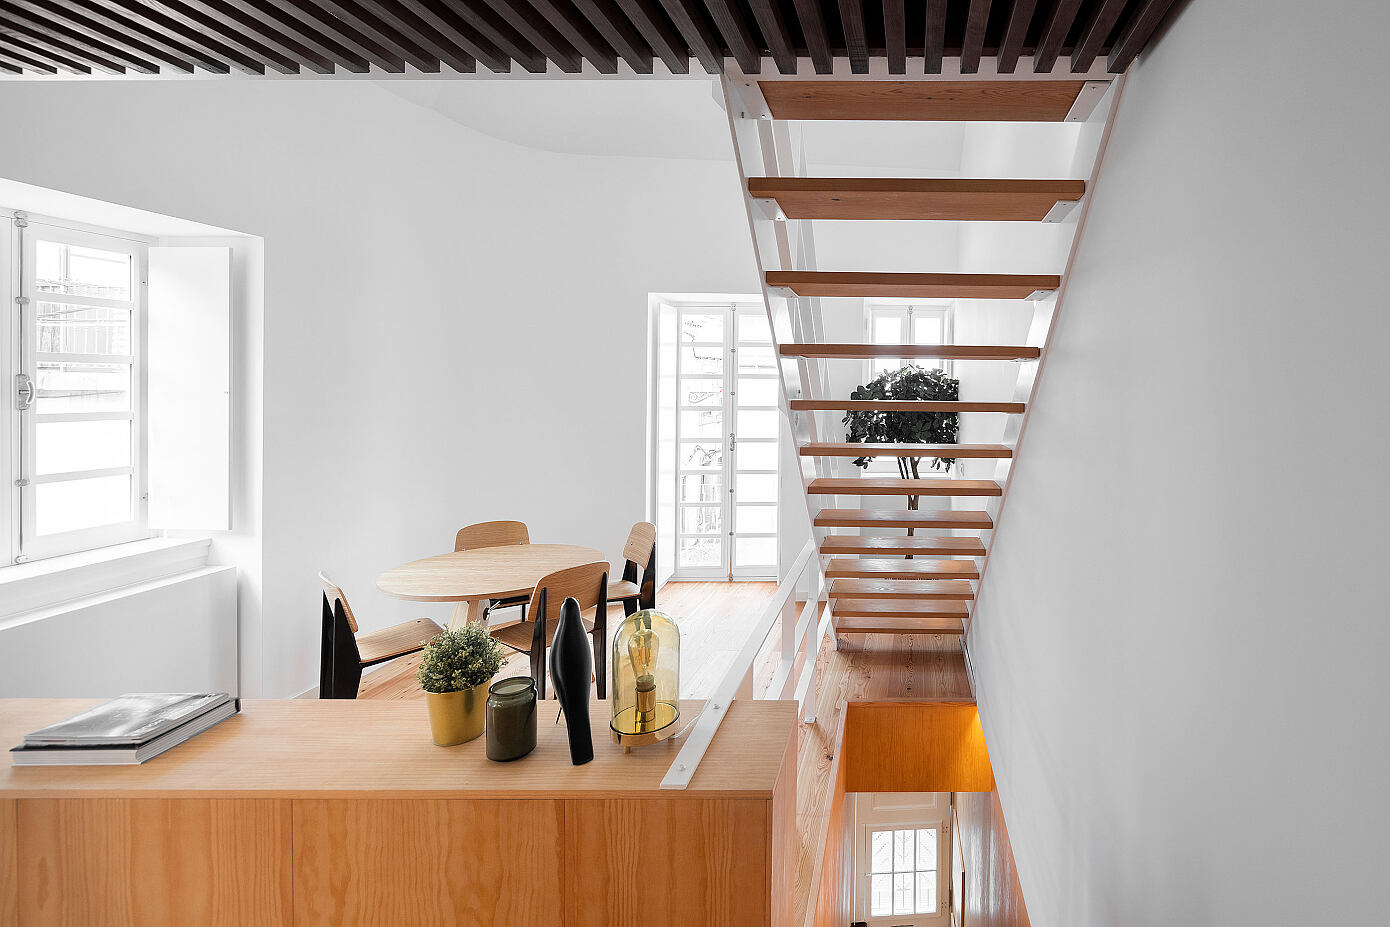 Casa dos Oleiros by Paulo Martins Arq&Design